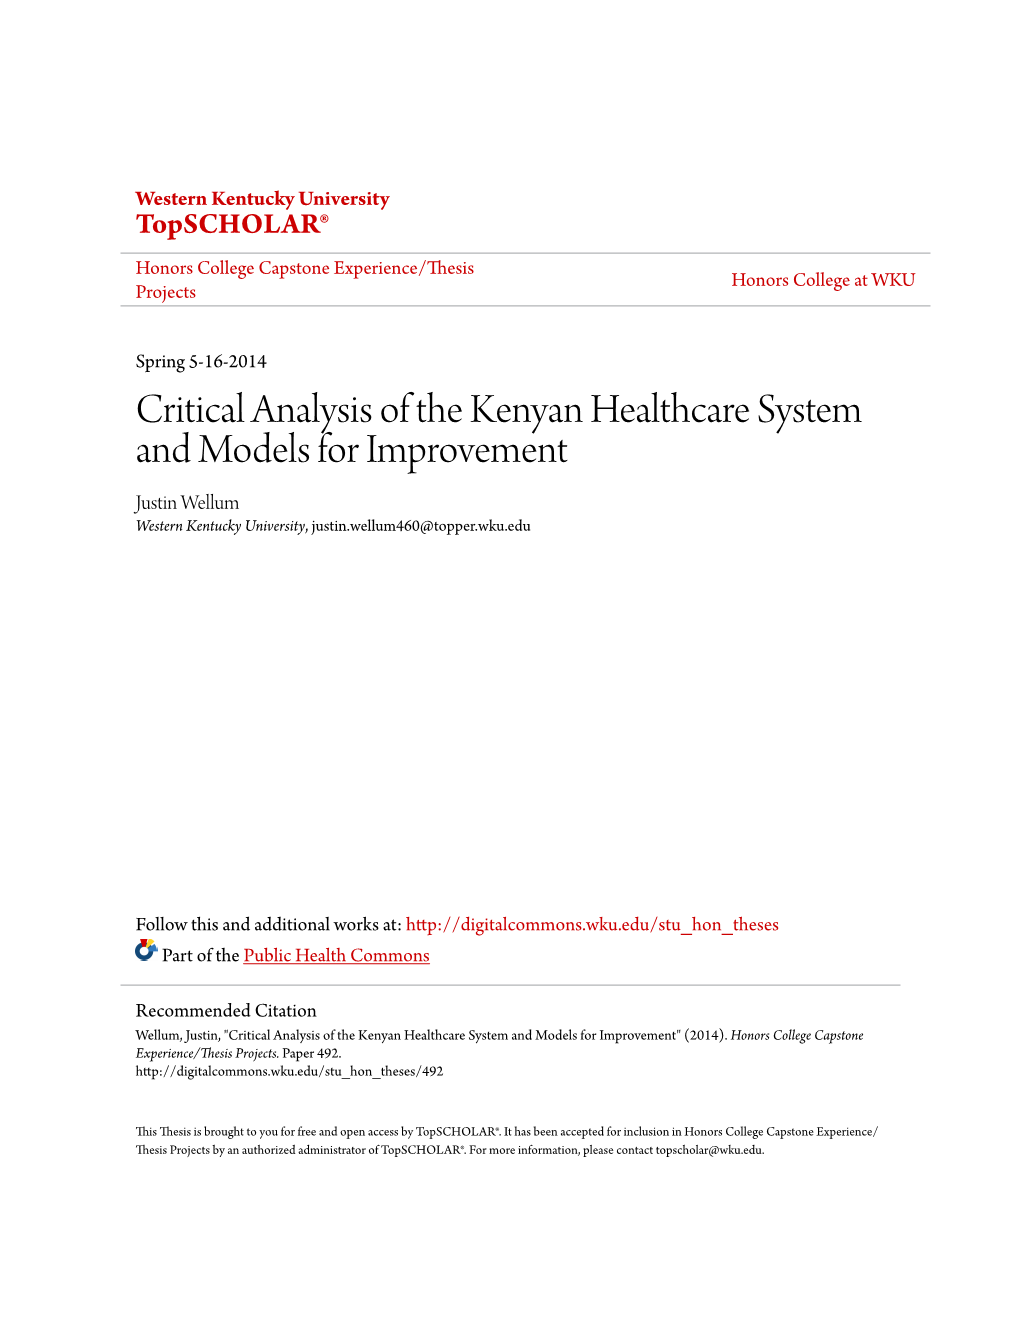 Critical Analysis of the Kenyan Healthcare System and Models for Improvement Justin Wellum Western Kentucky University, Justin.Wellum460@Topper.Wku.Edu